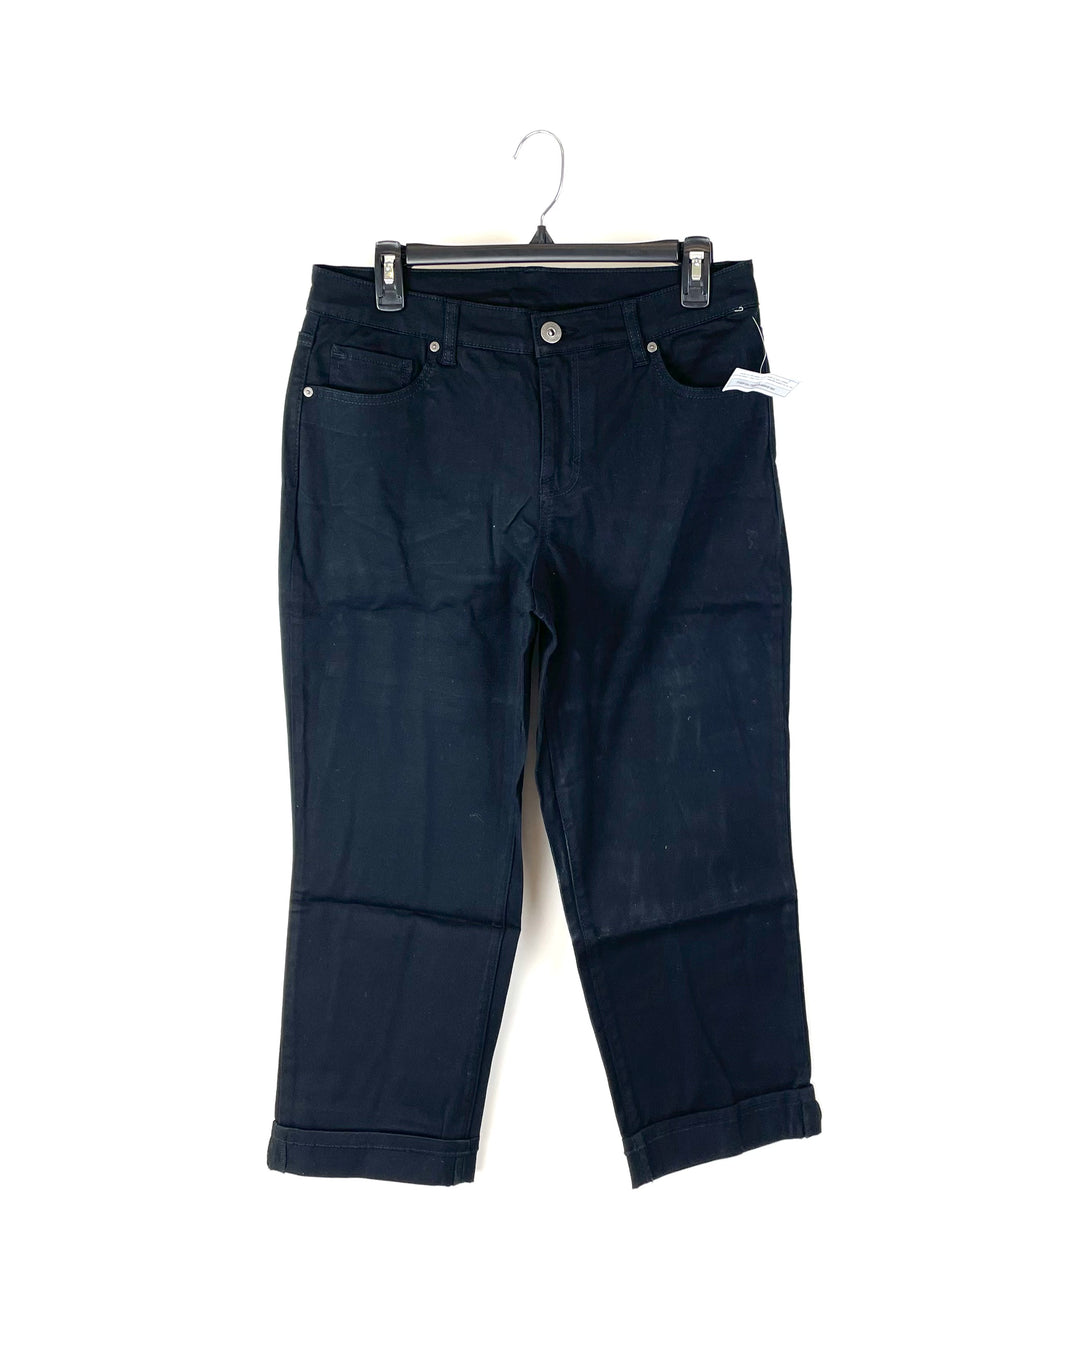 Black Mid Rise Denim Jeans - Size 8